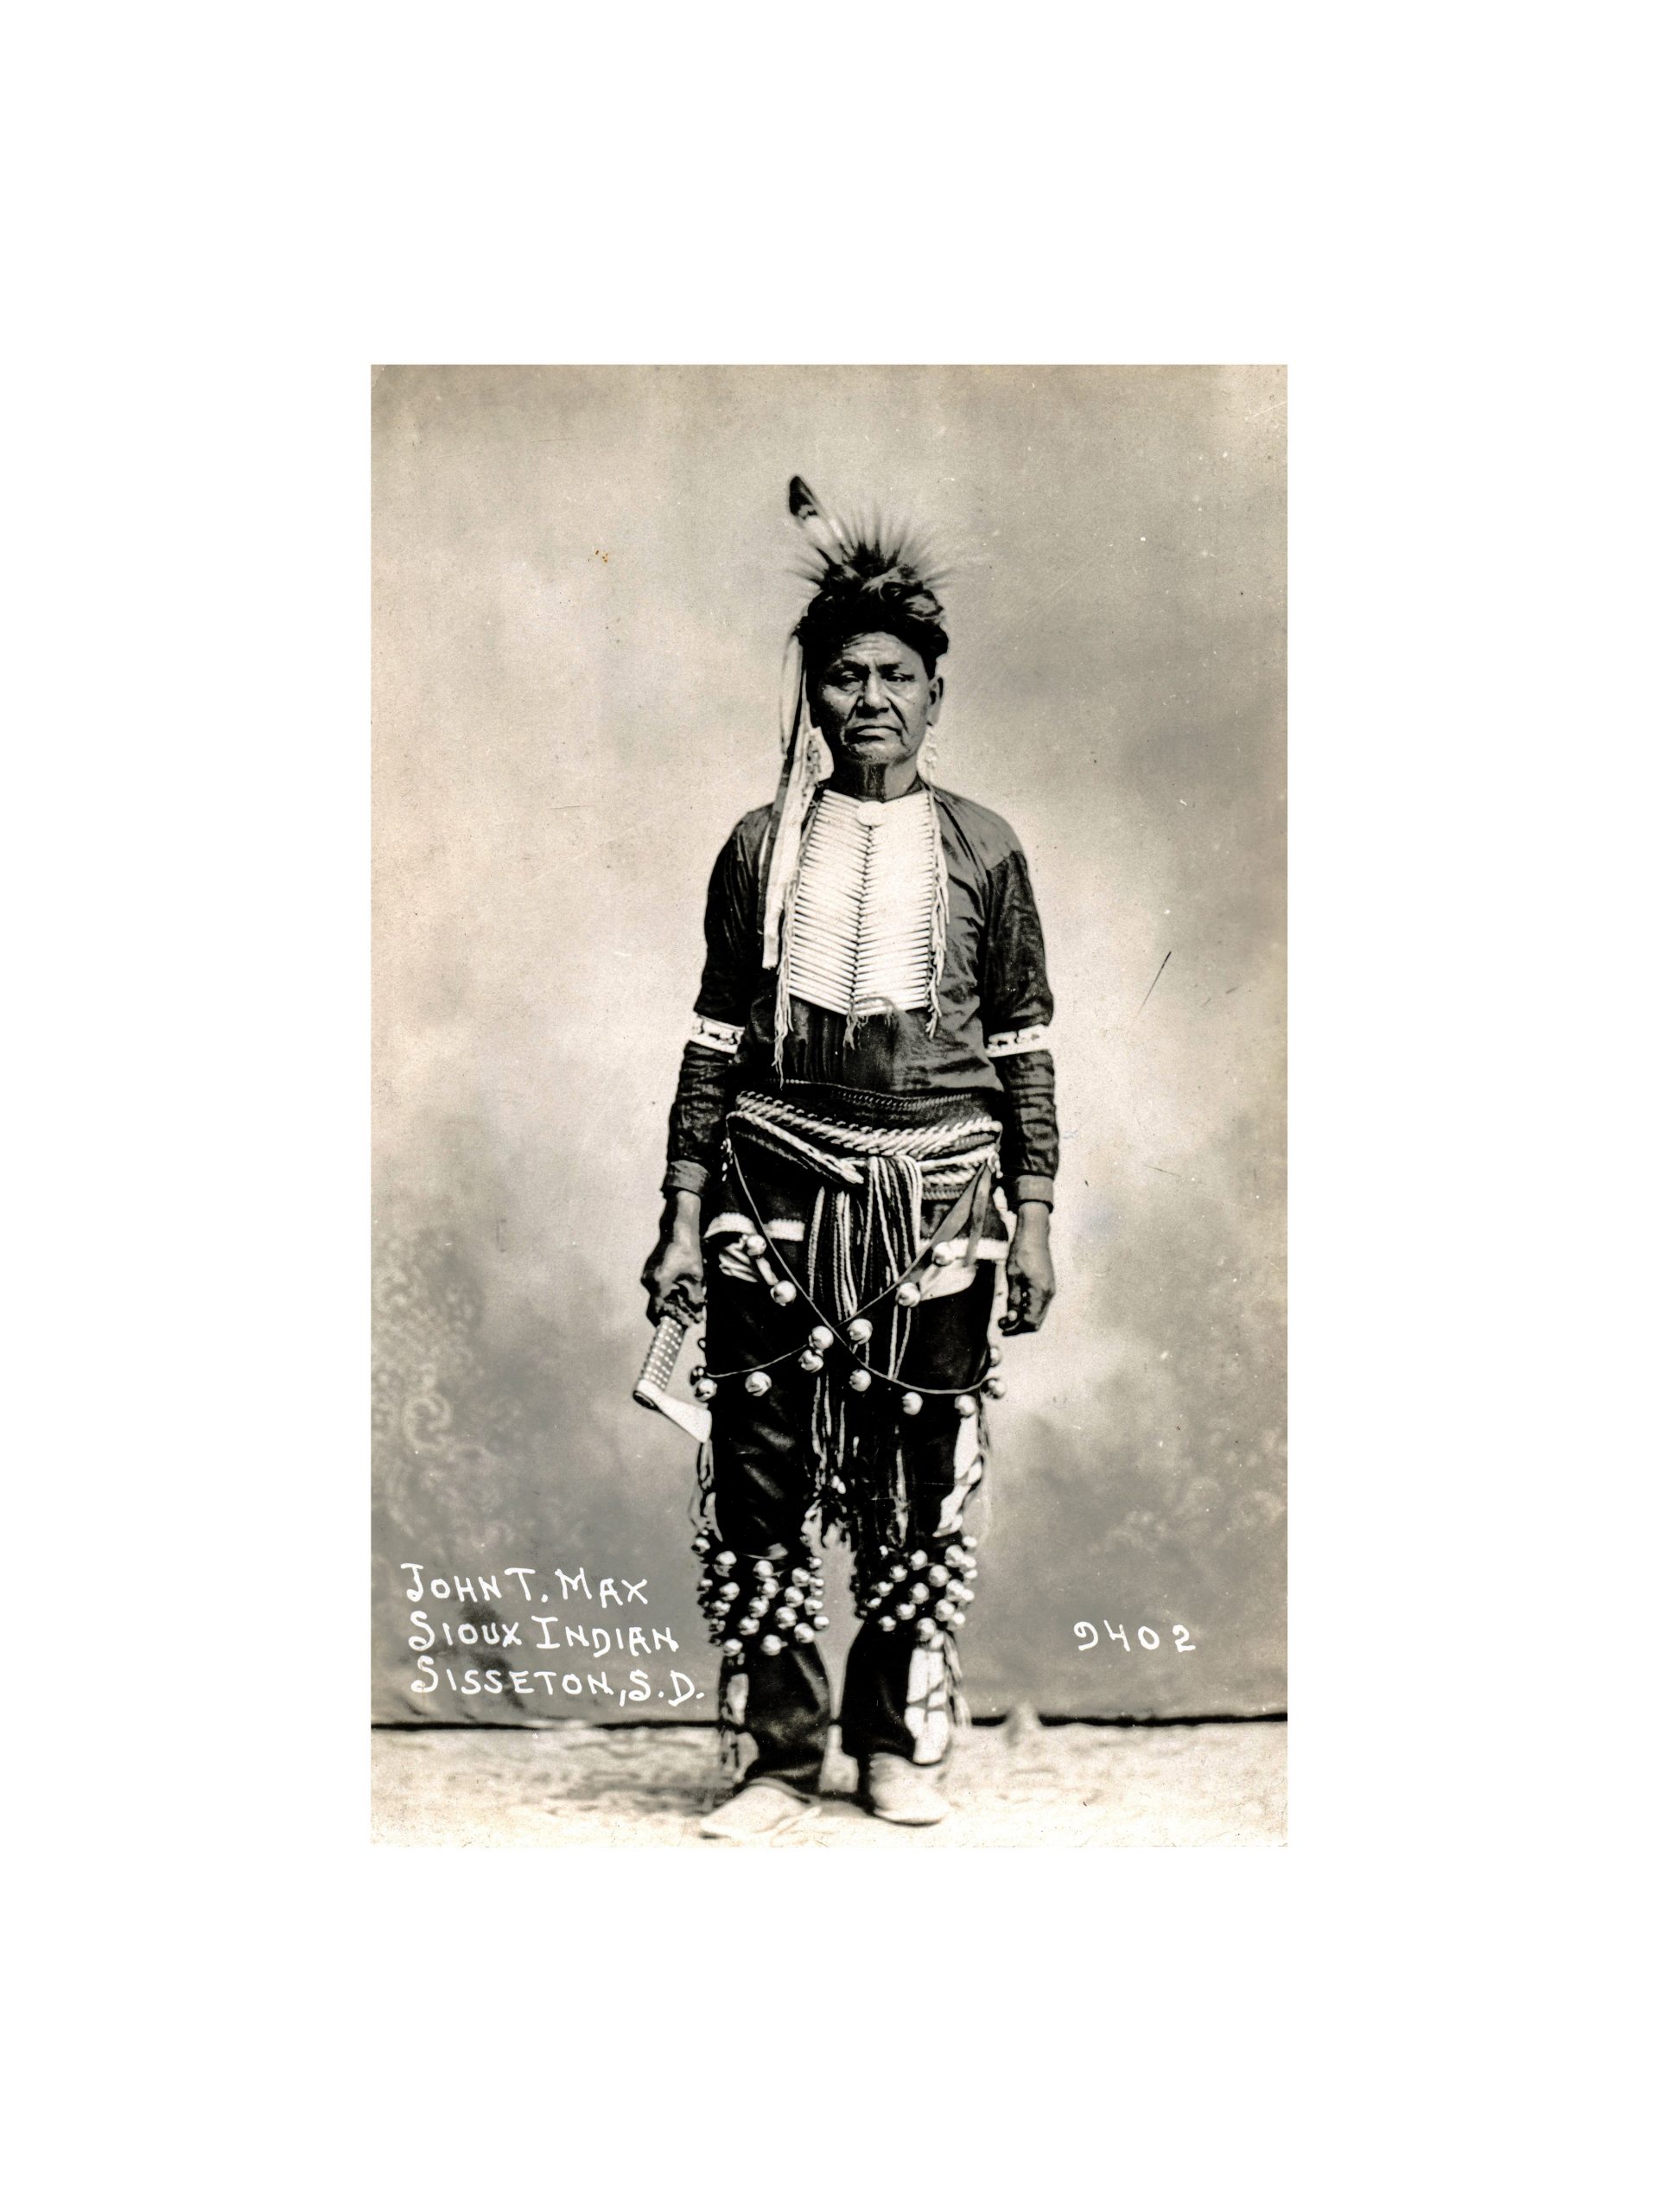 Sioux Indians photograph